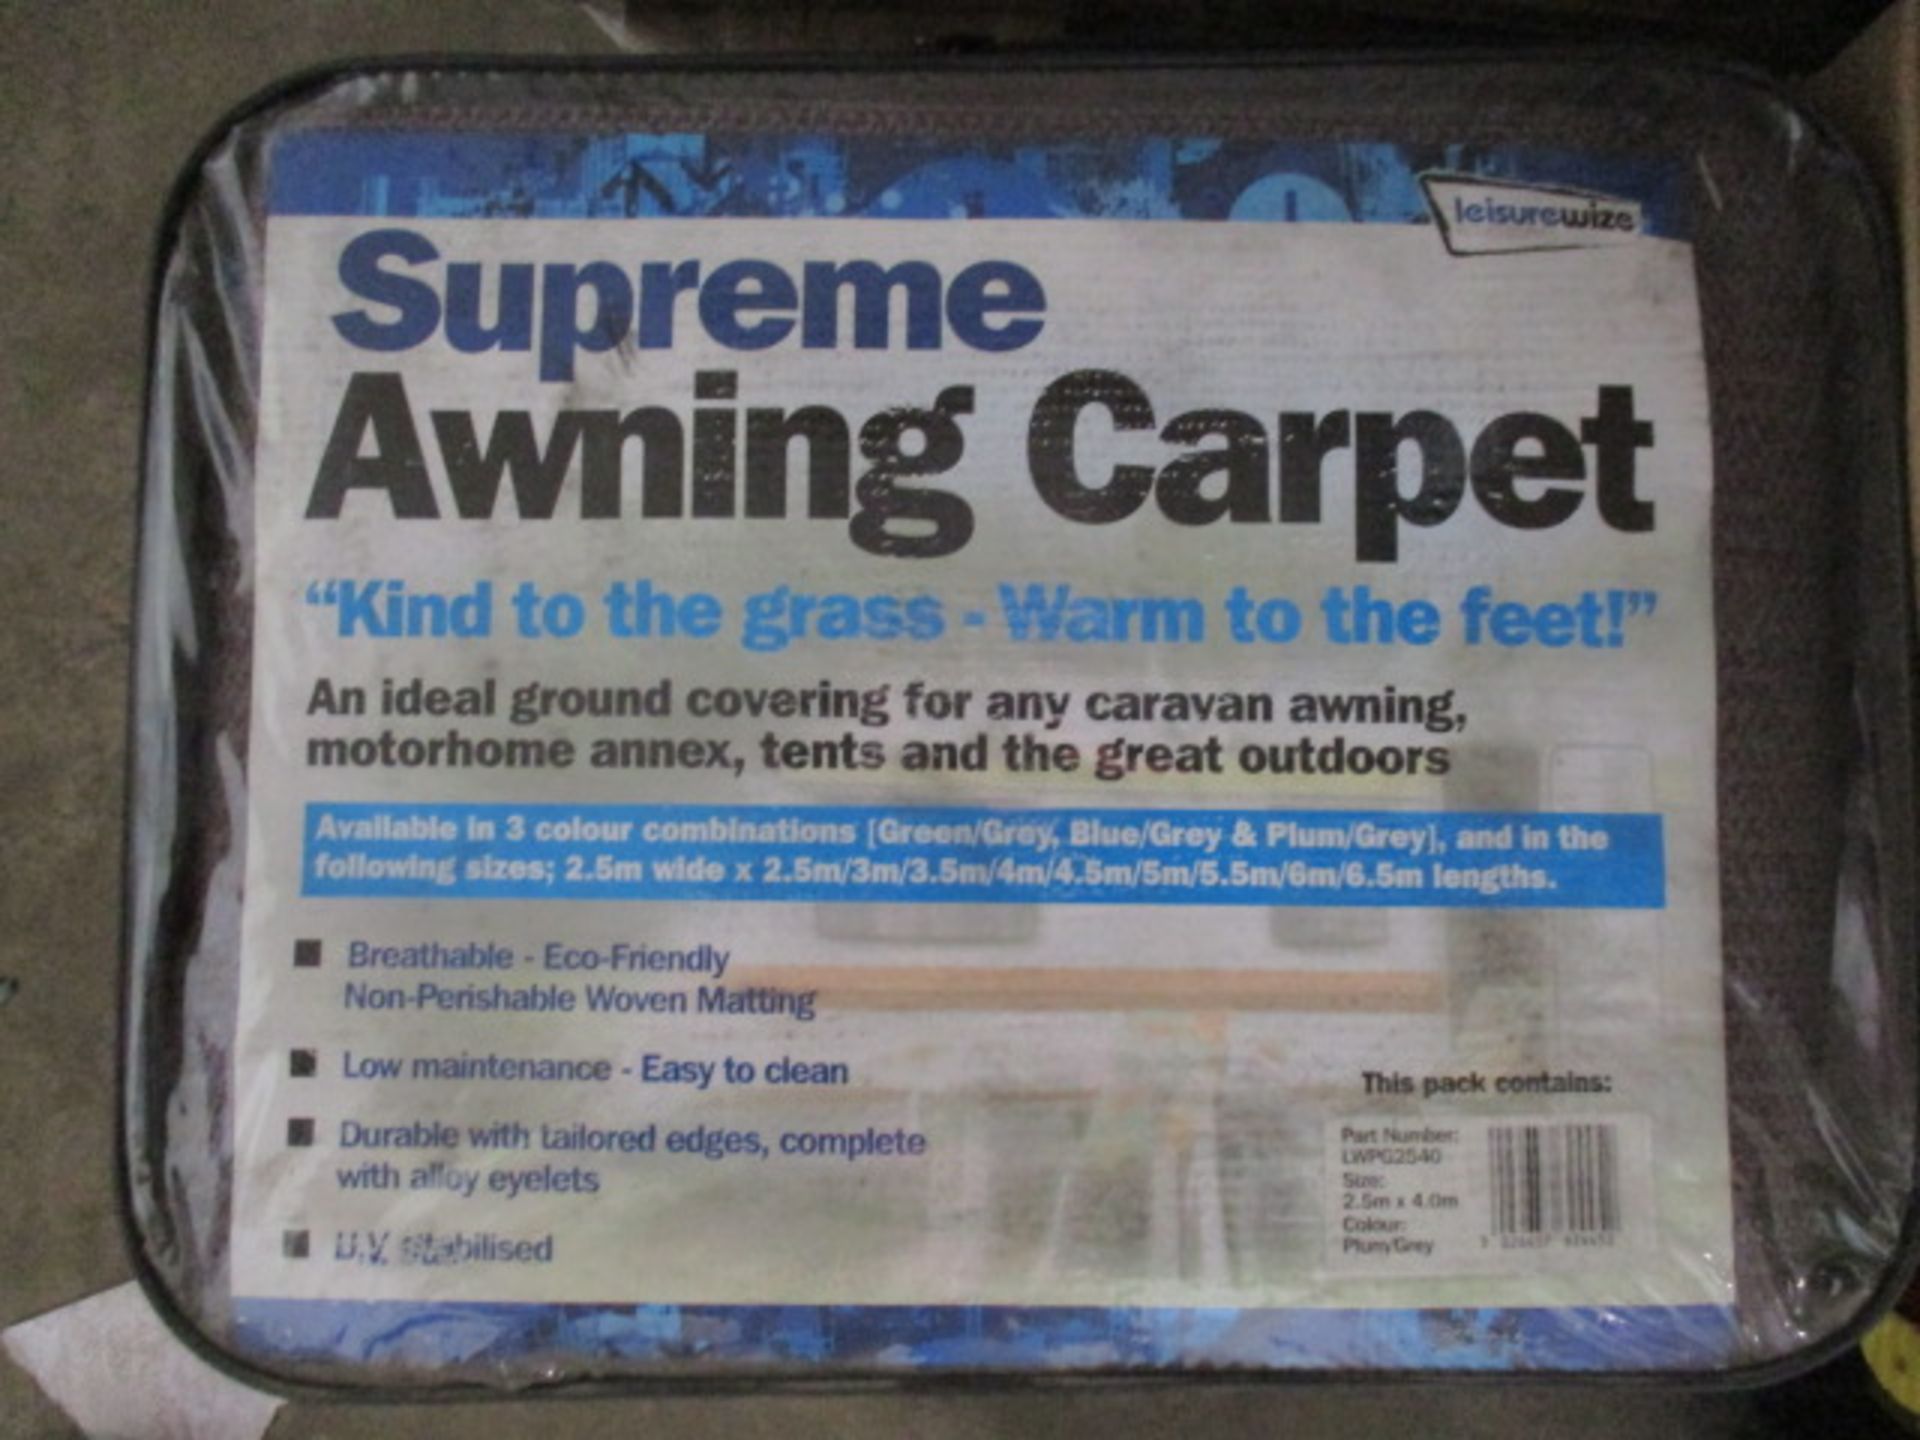 Supreme awning carpet size 2.5 x 4 meters RRP £49.99 Sealed